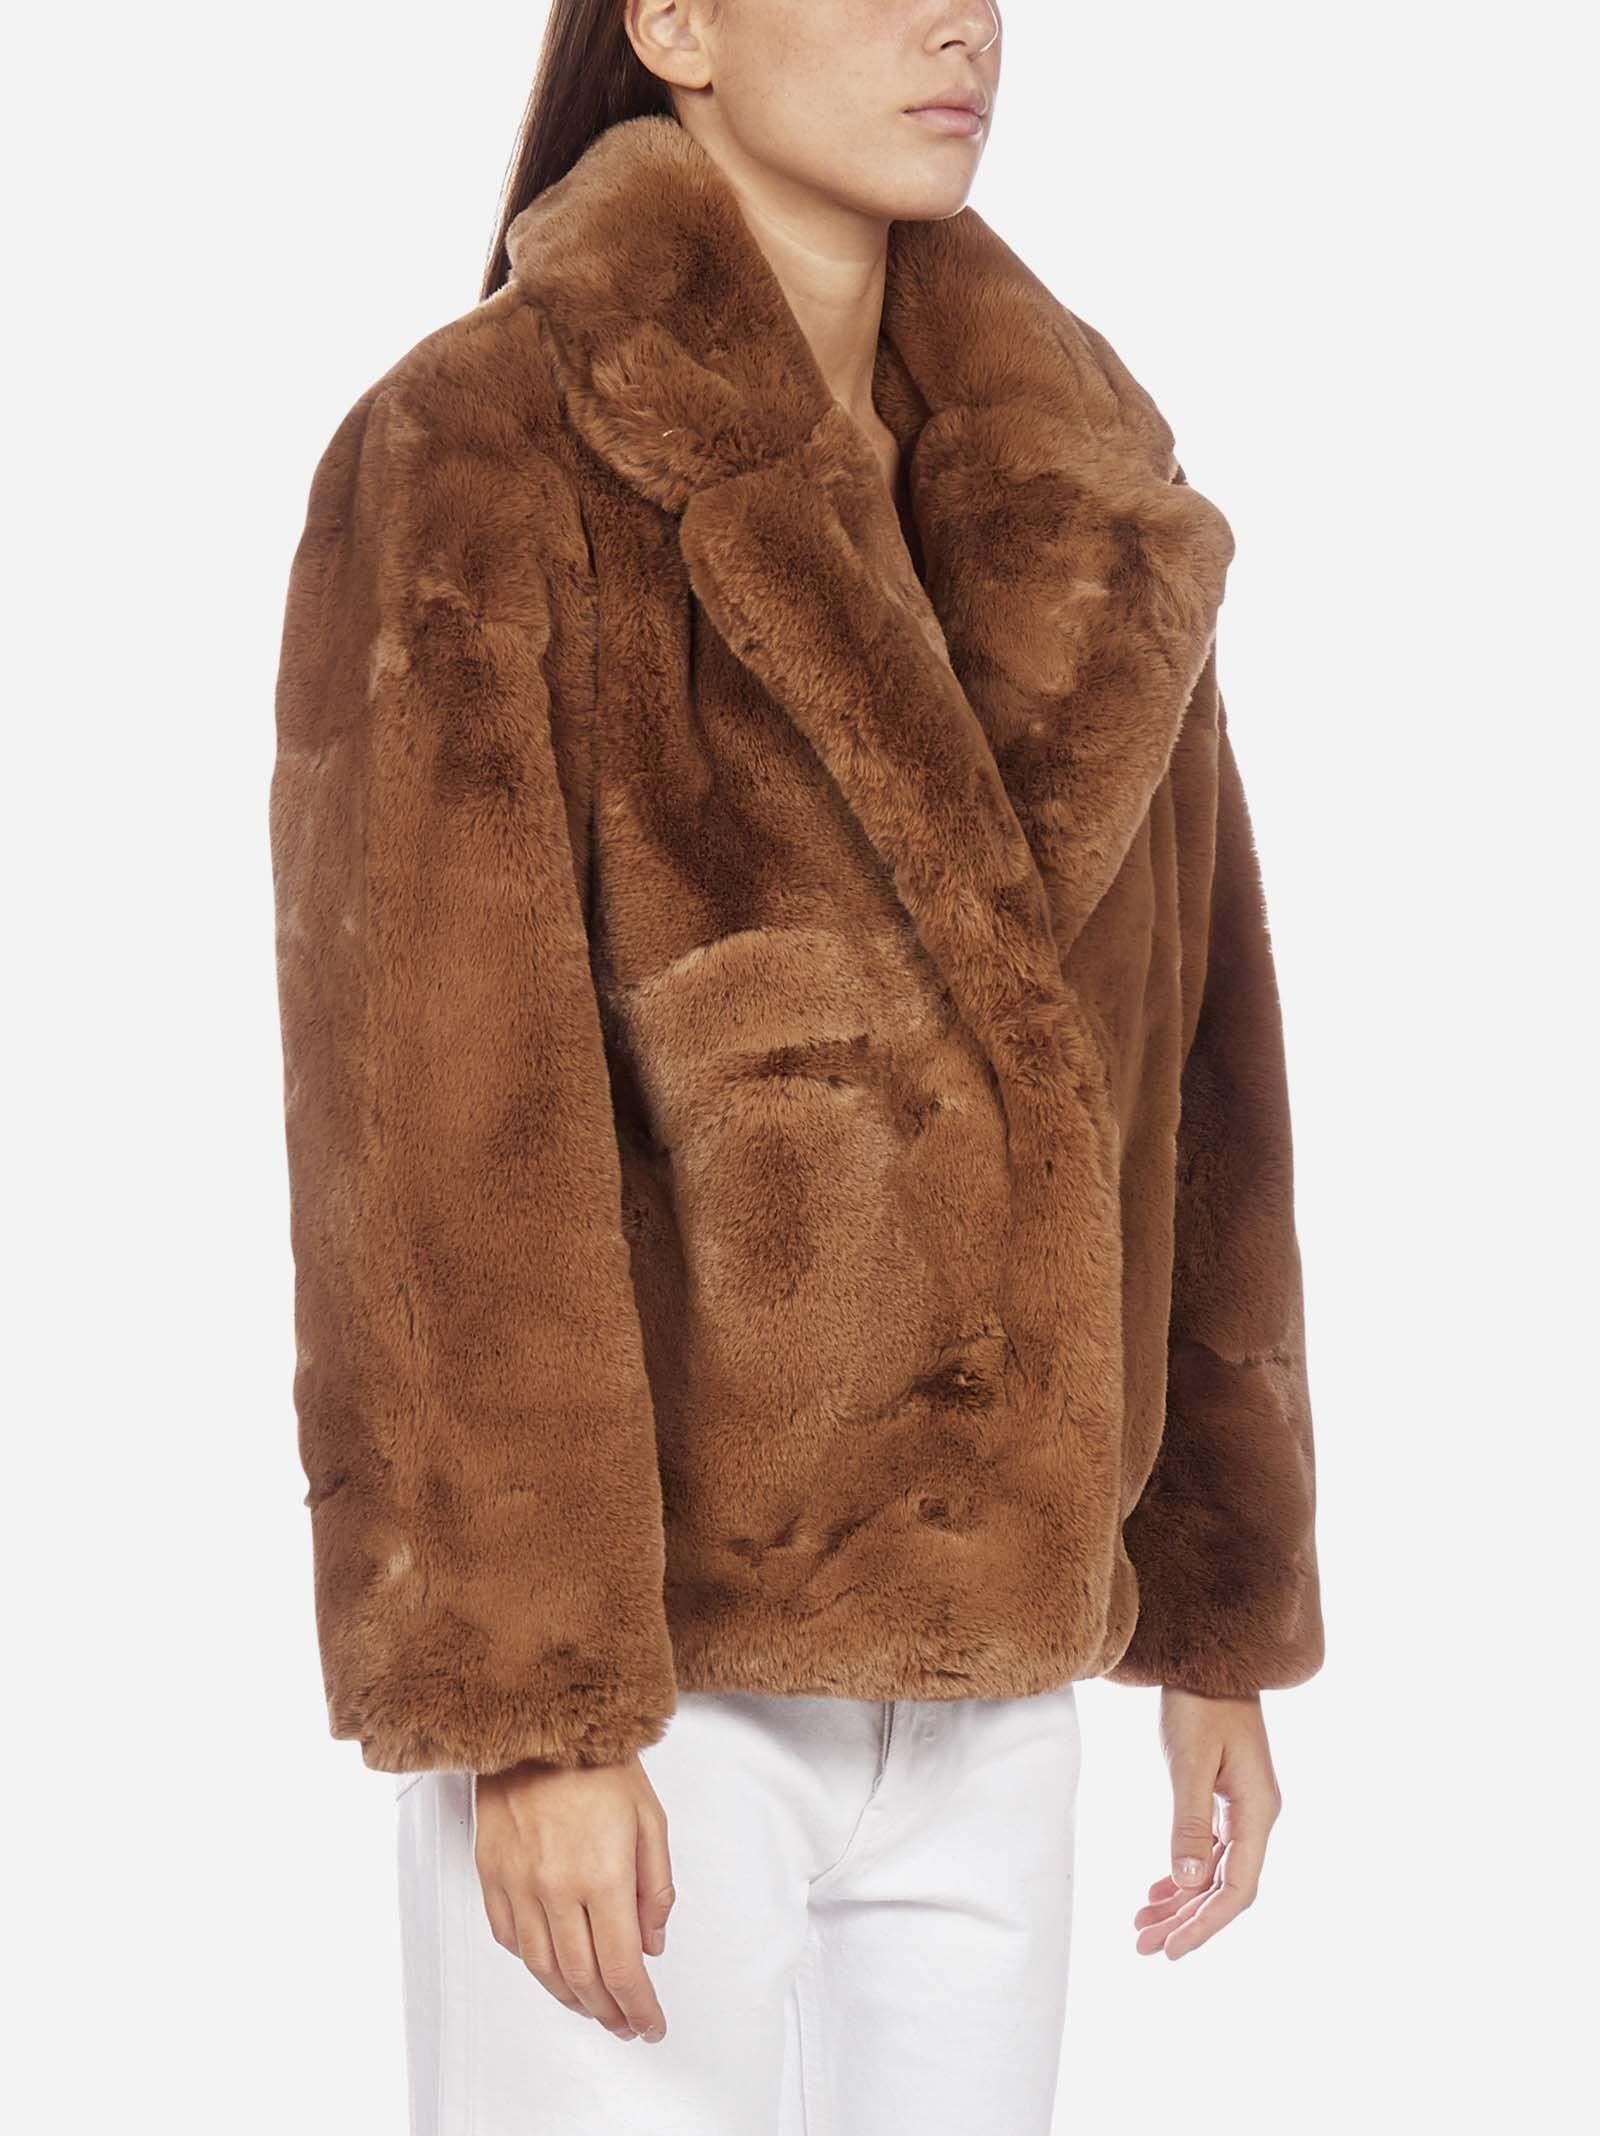 Apparis Manon Faux Fur Short Coat in Camel (Brown) - Lyst